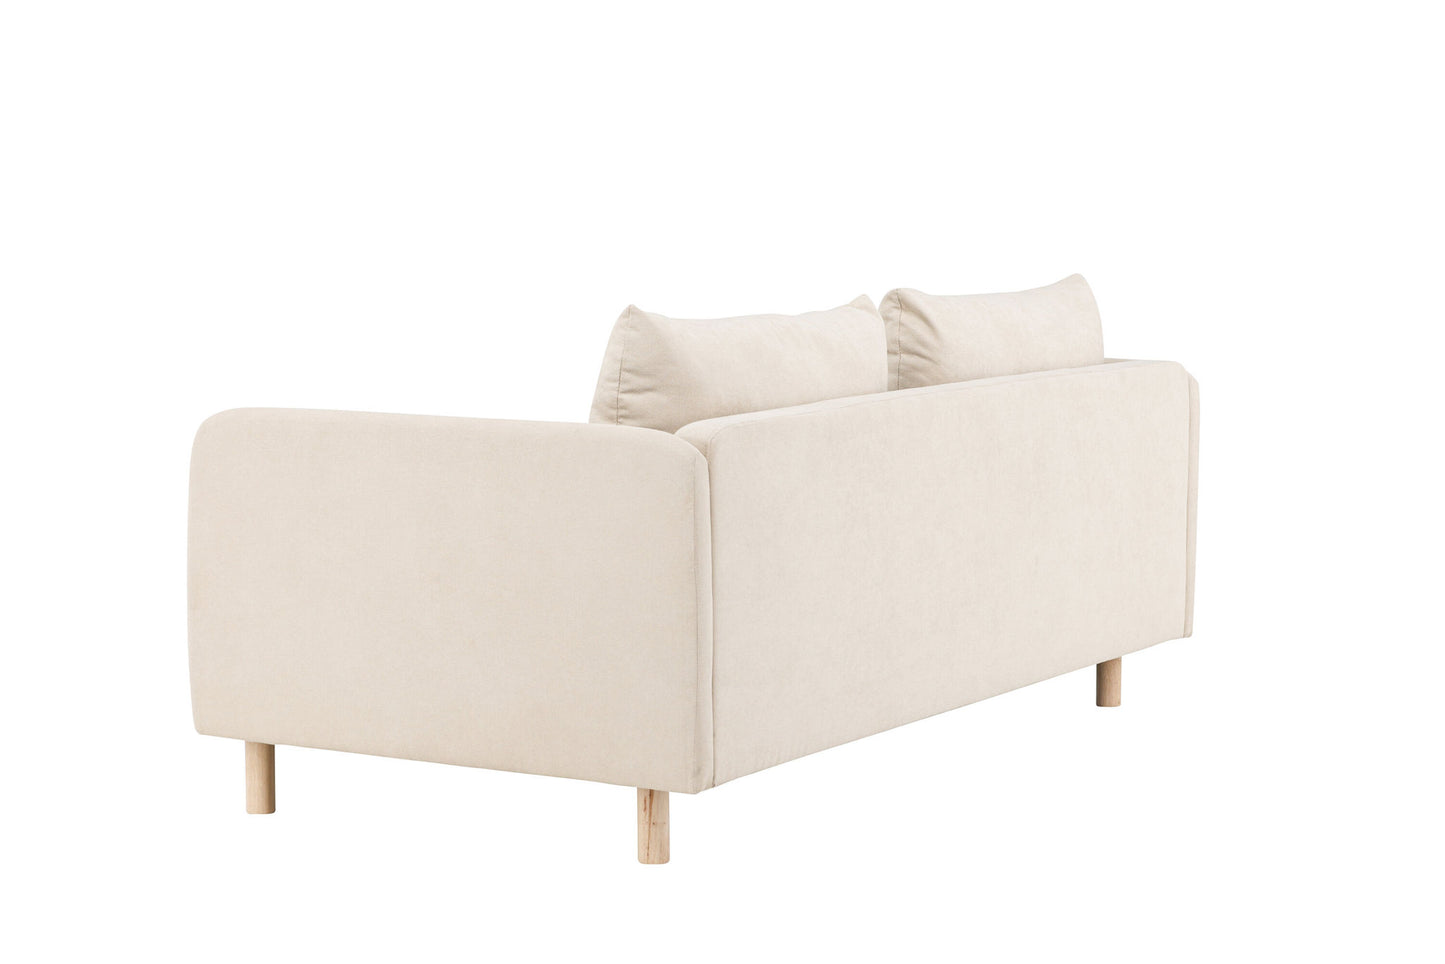 Nul 2 -sæde sofa - Woodlook / Beige stof